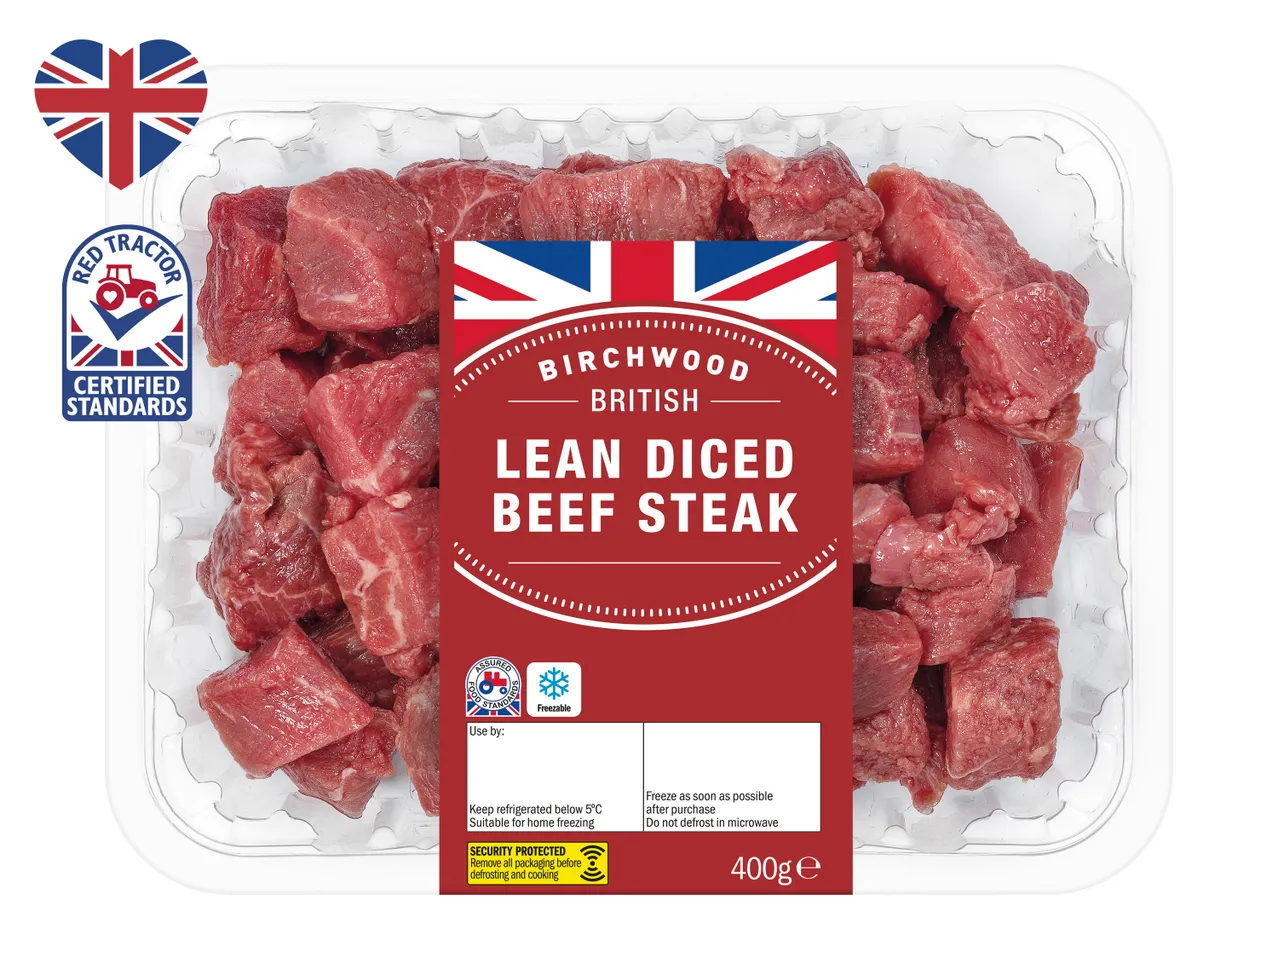 Go to full screen view: Birchwood British Lean Diced Beef Steak - Image 1